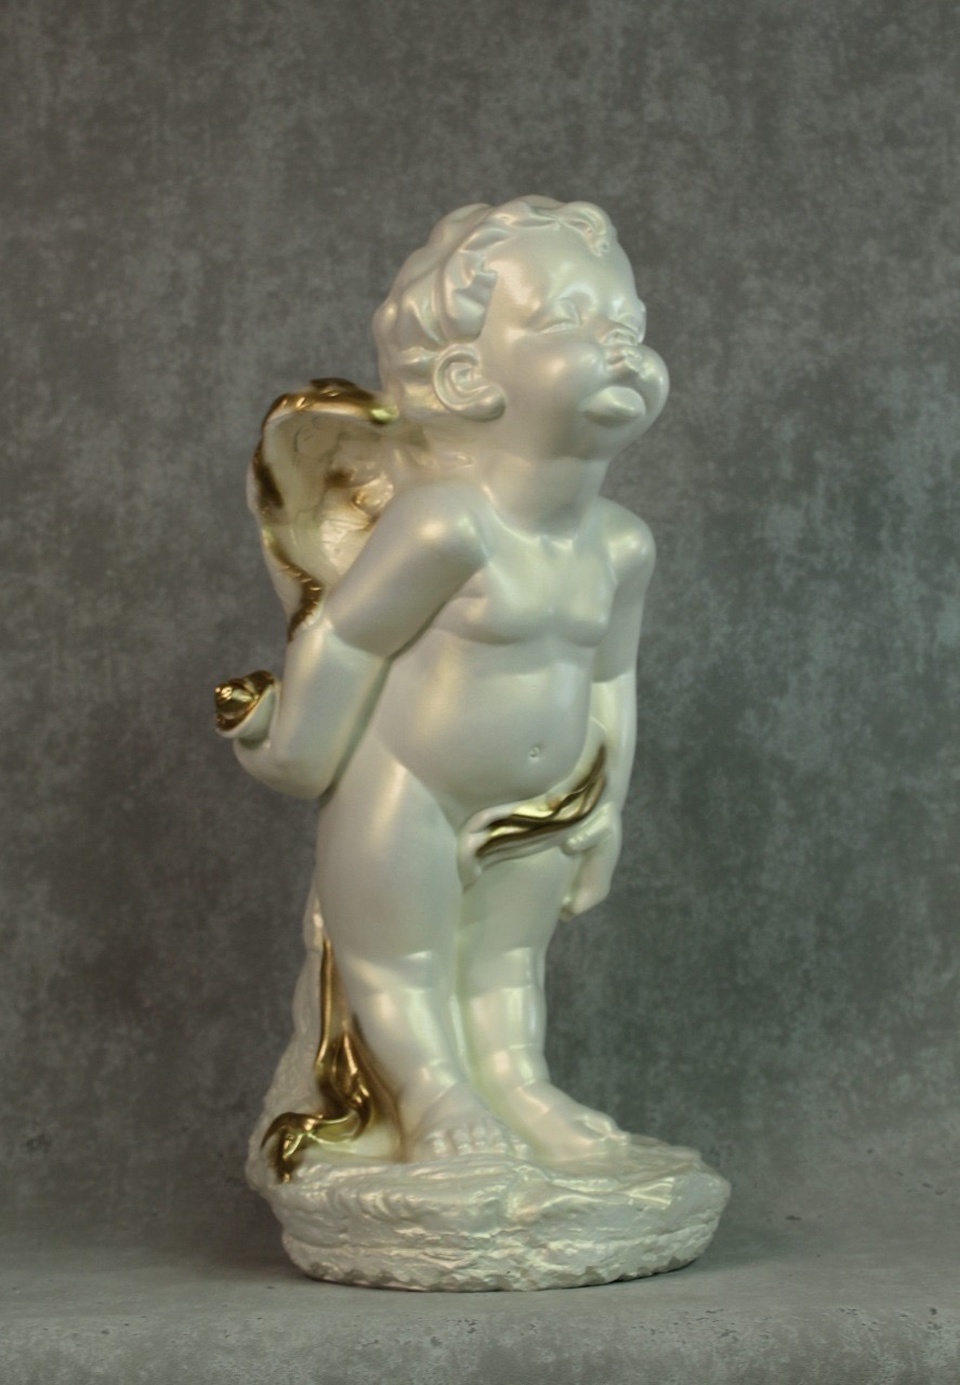 Ангел и Фея (жемчуг ,позолота ) - 1 500 ₽, заказать онлайн.